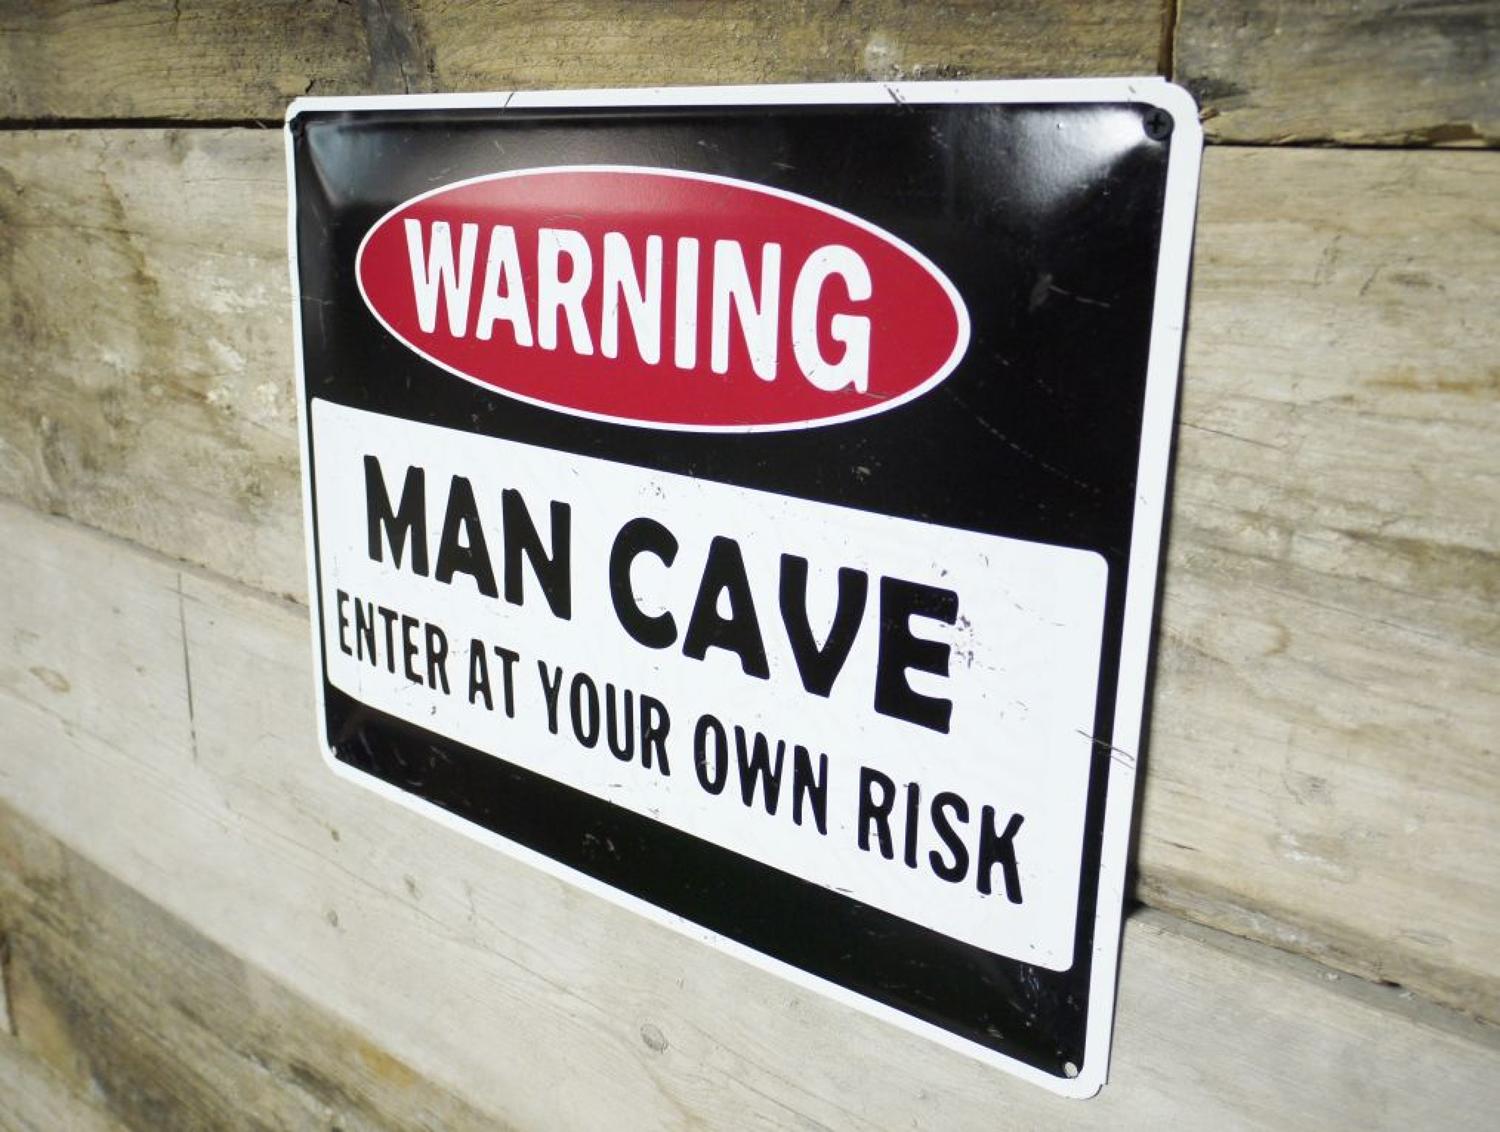 Man Cave Metal wall hanging sign.